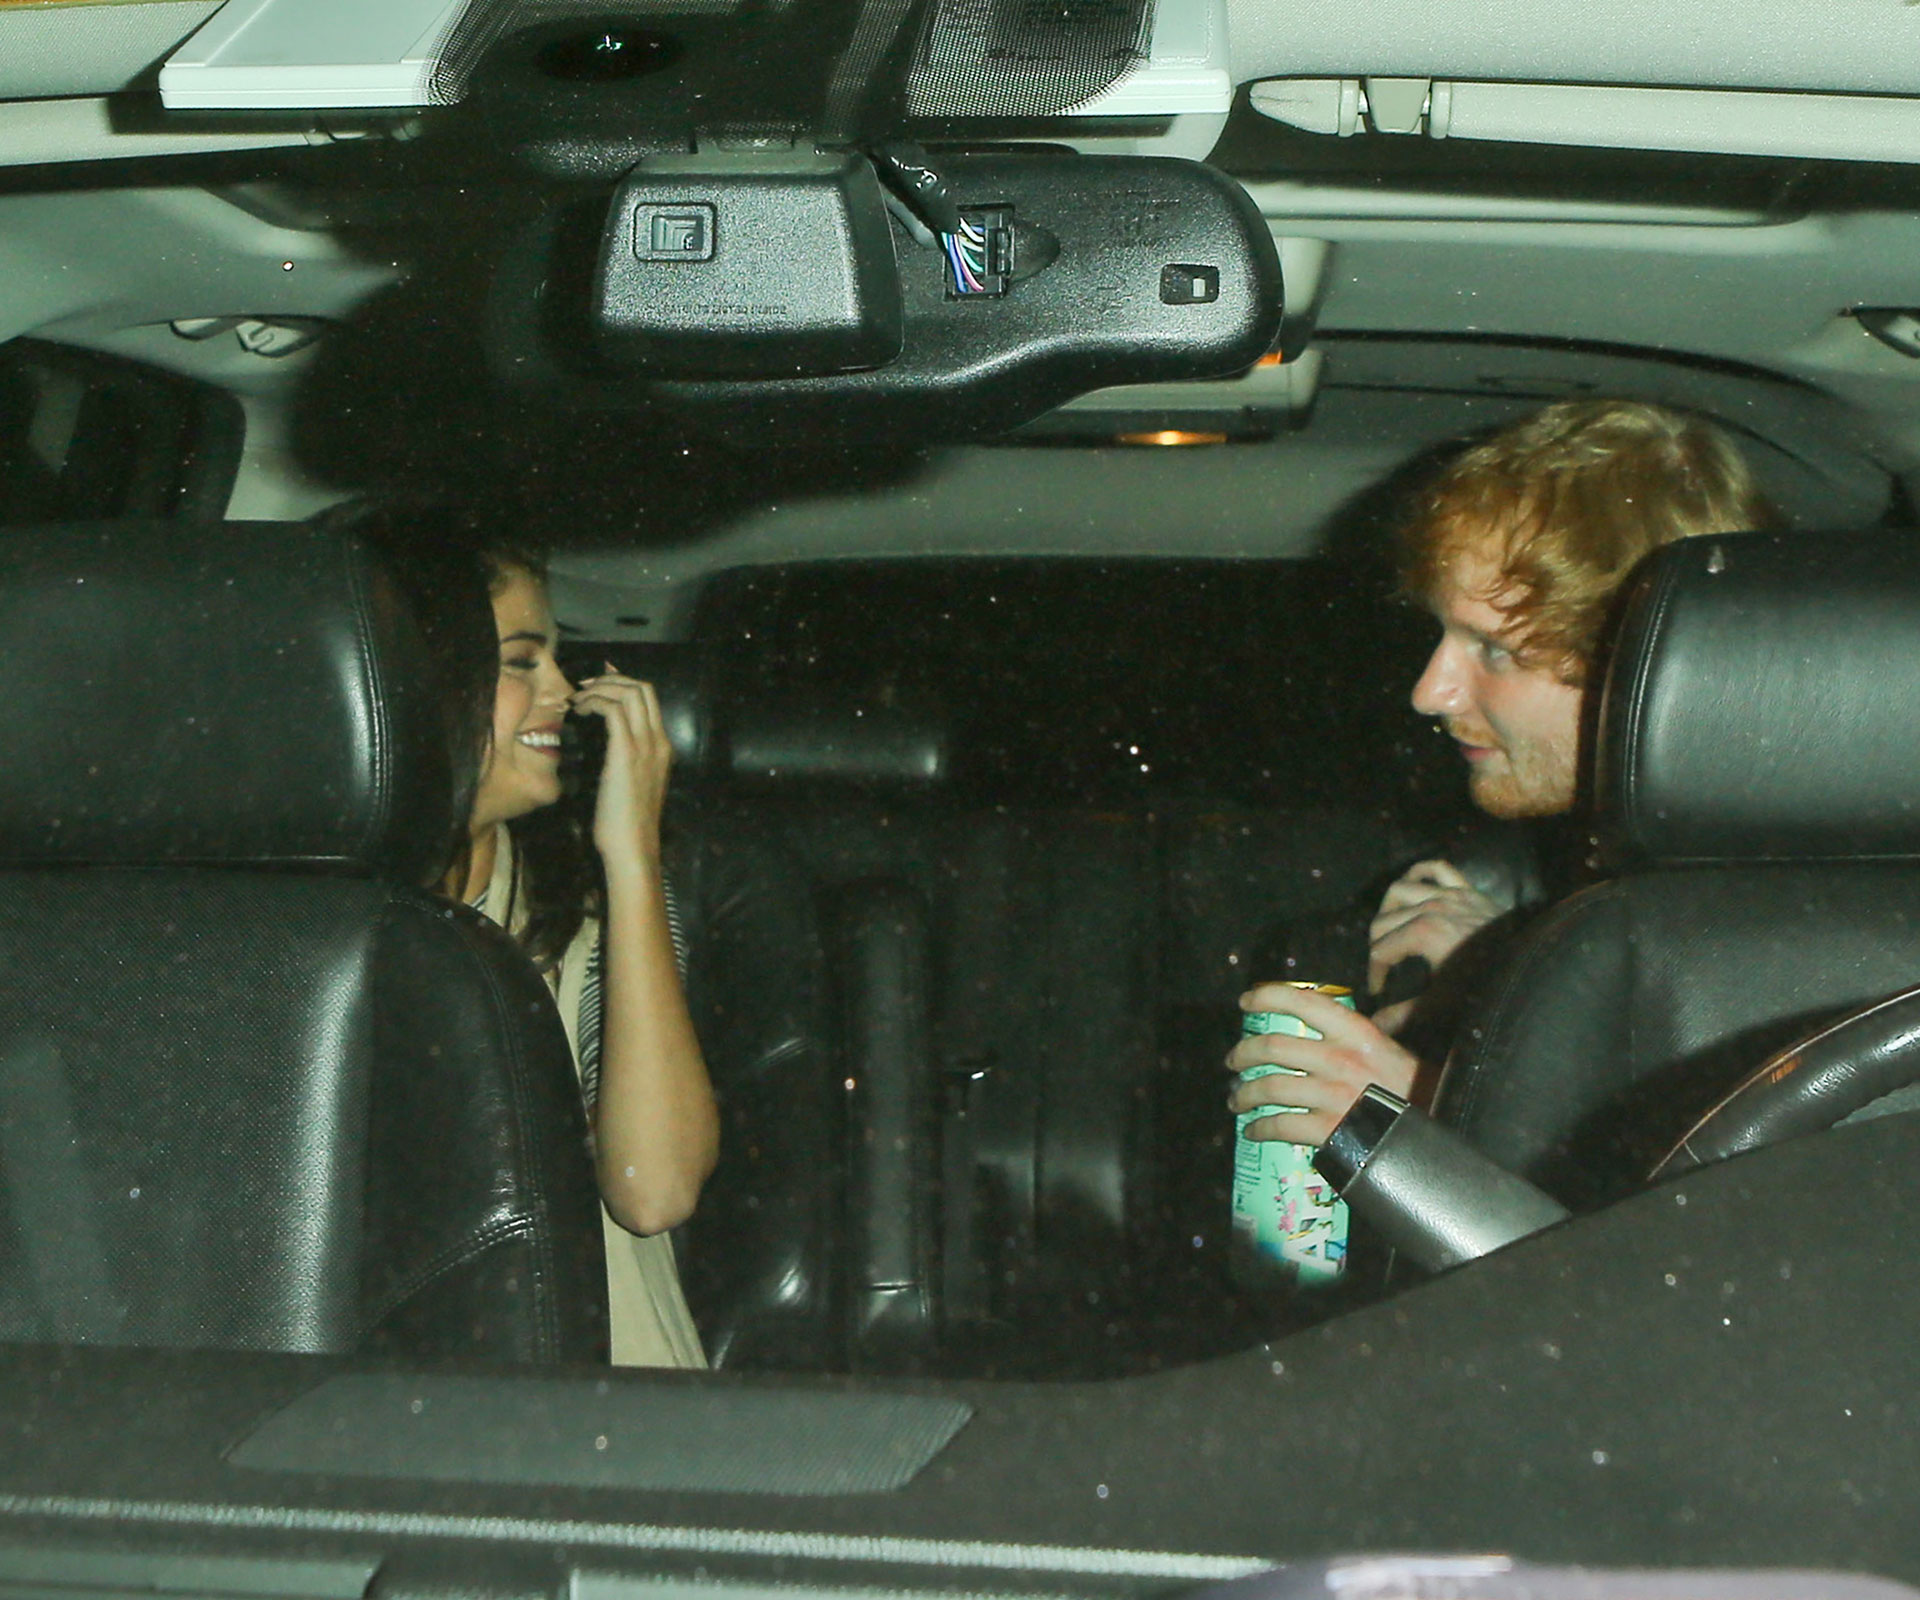 Ed Sheeran and Selena Gomez